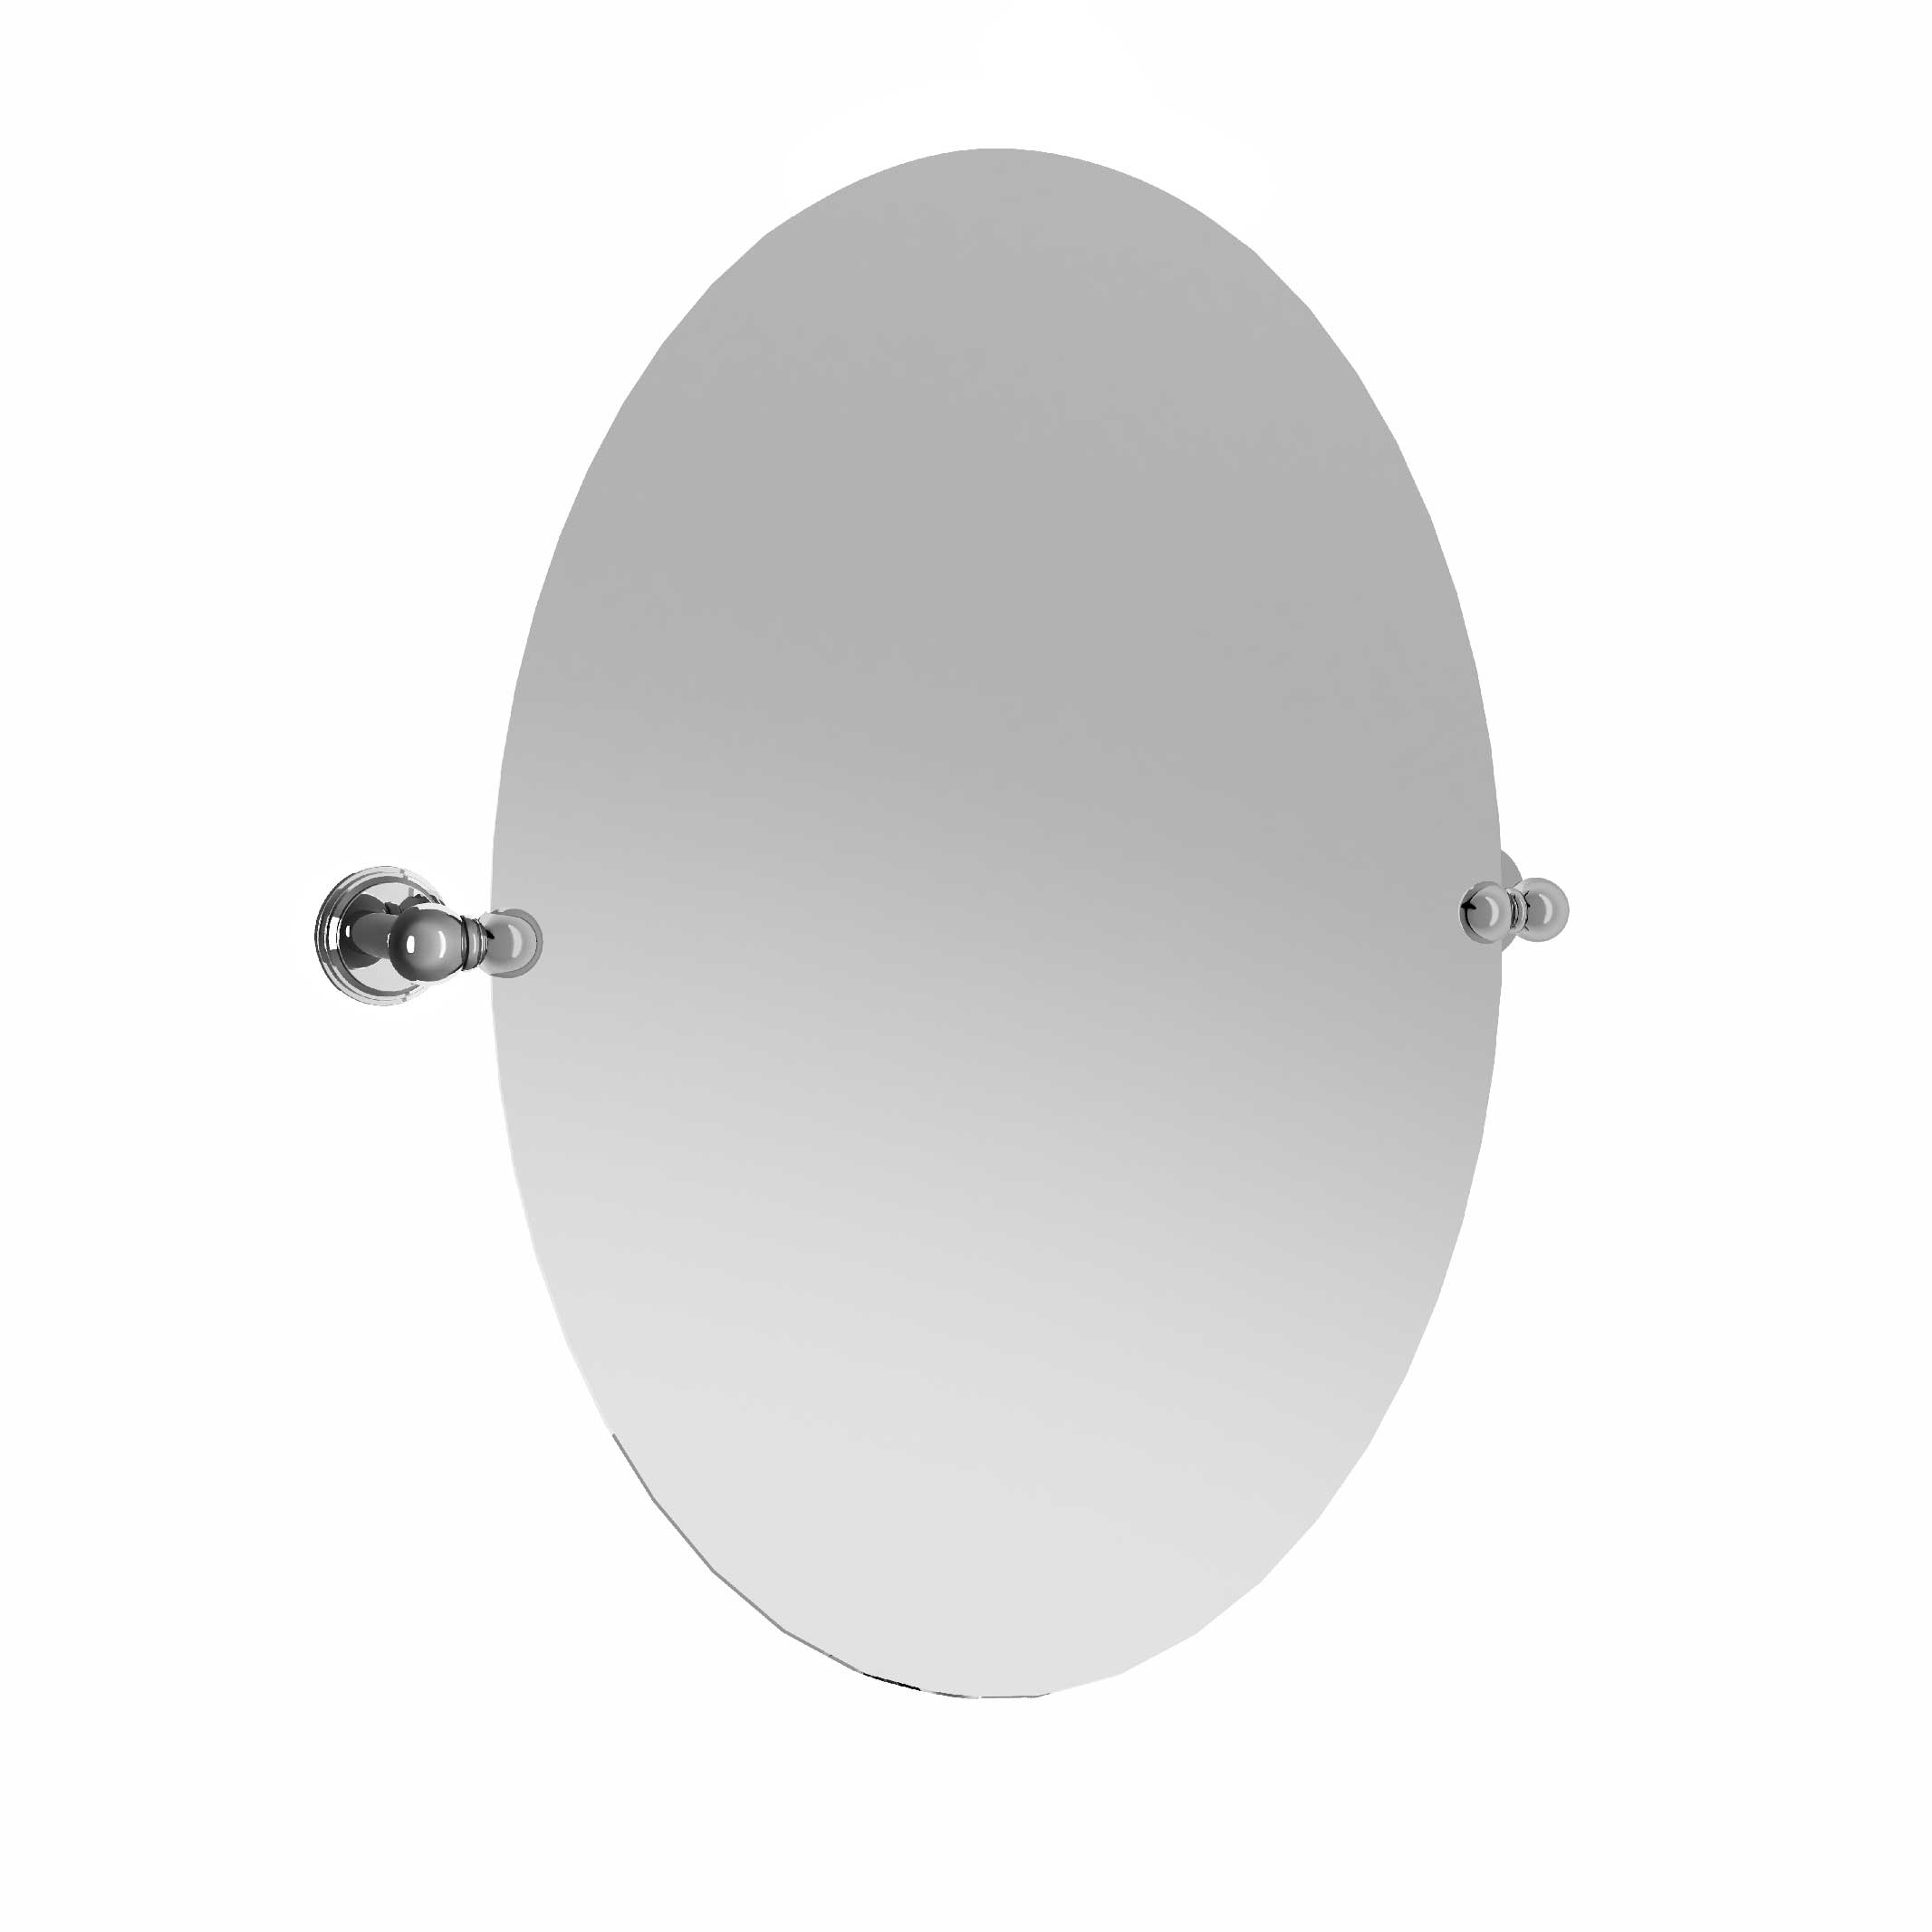 M60-537 Oval mirror